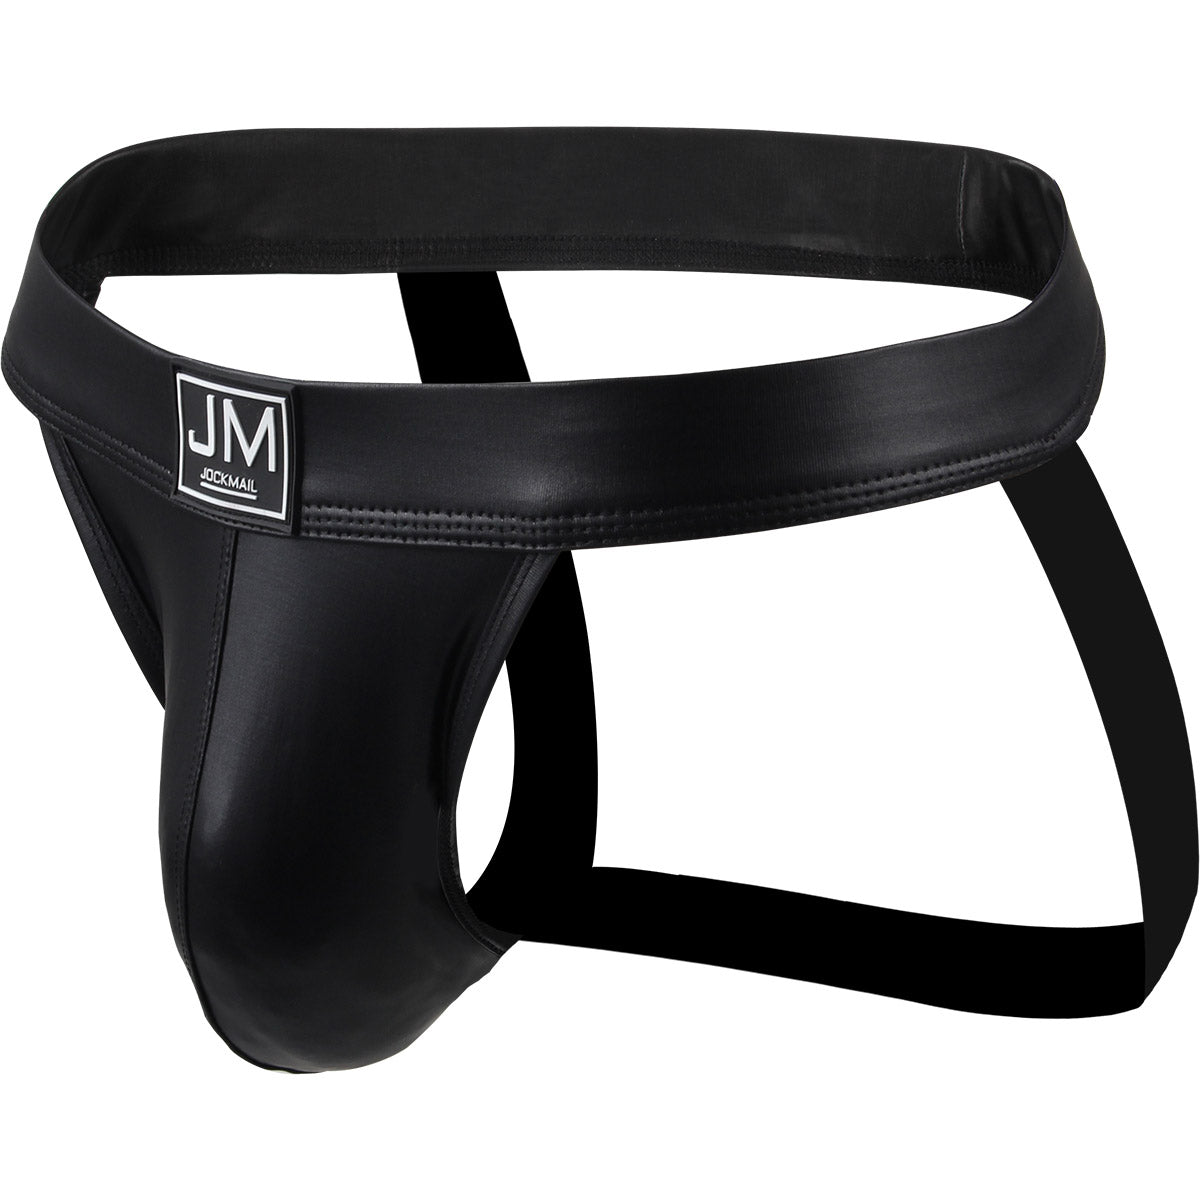 JM Party Men's Leather G-String - Black